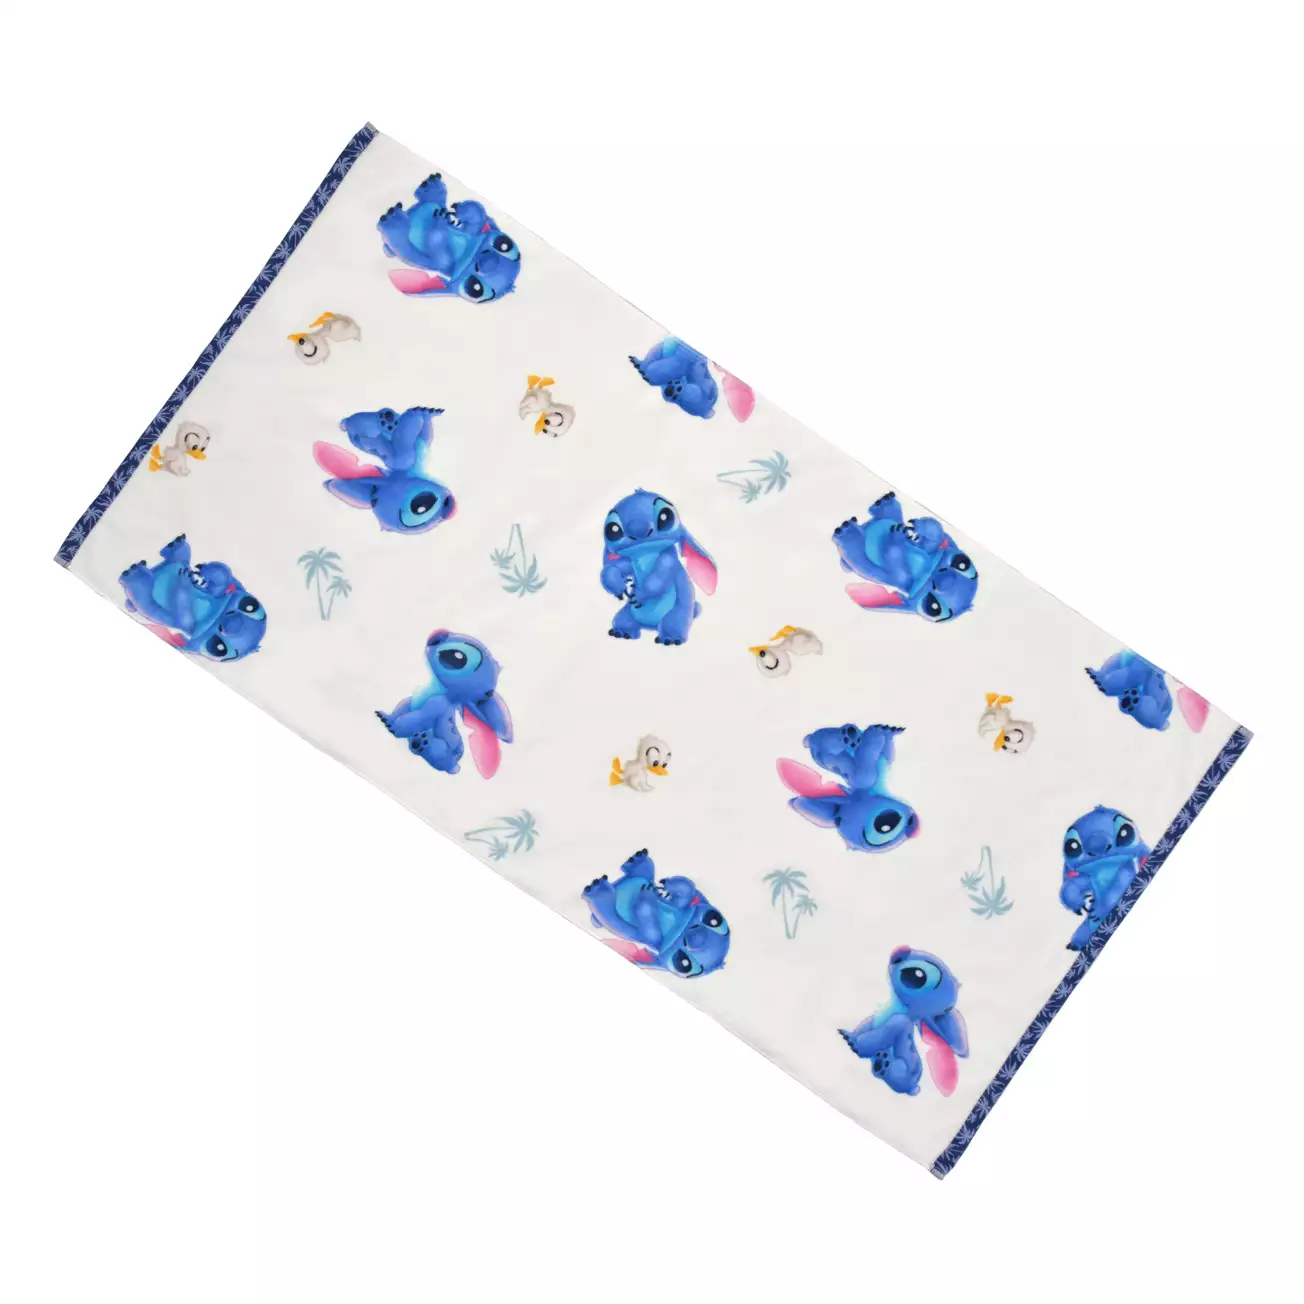 SDJ - Hug Disney Stitch Day Collection - Bath towel